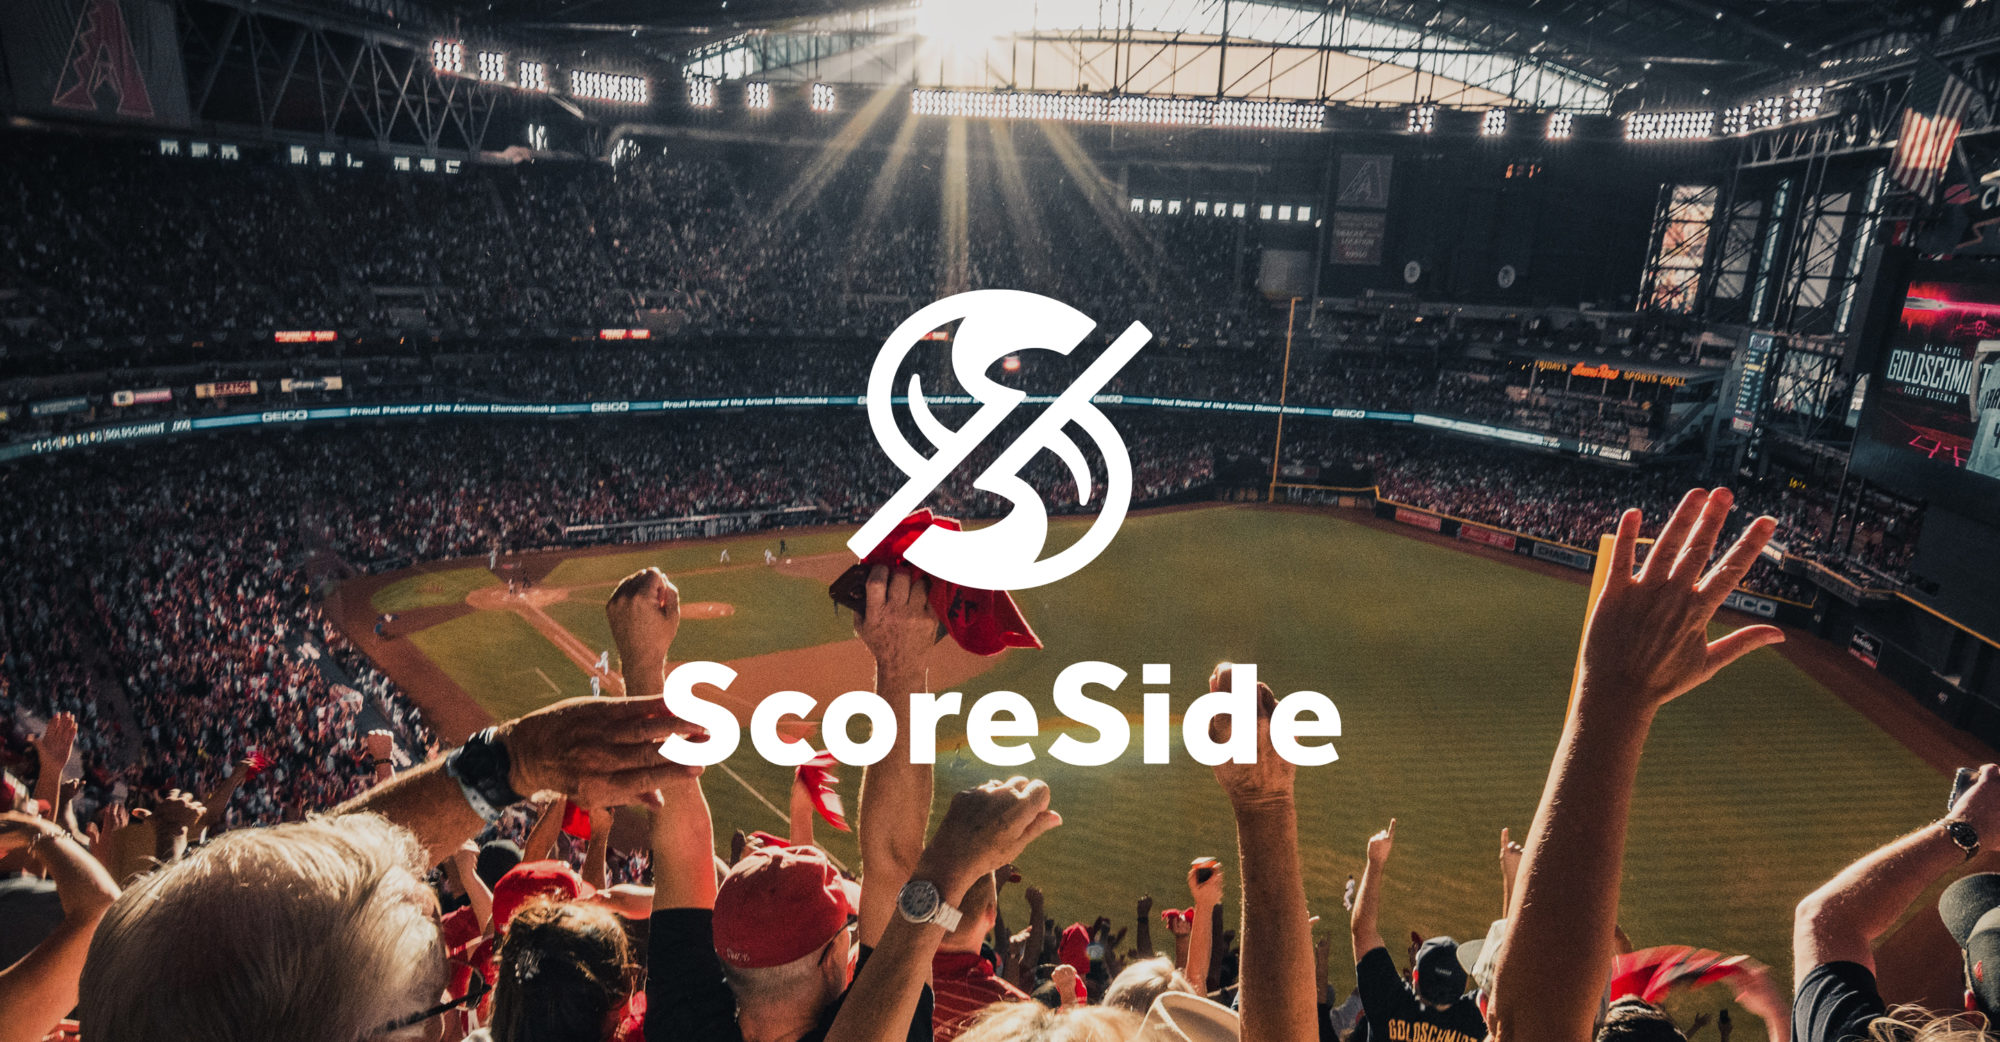 ScoreSide Logo Crowd